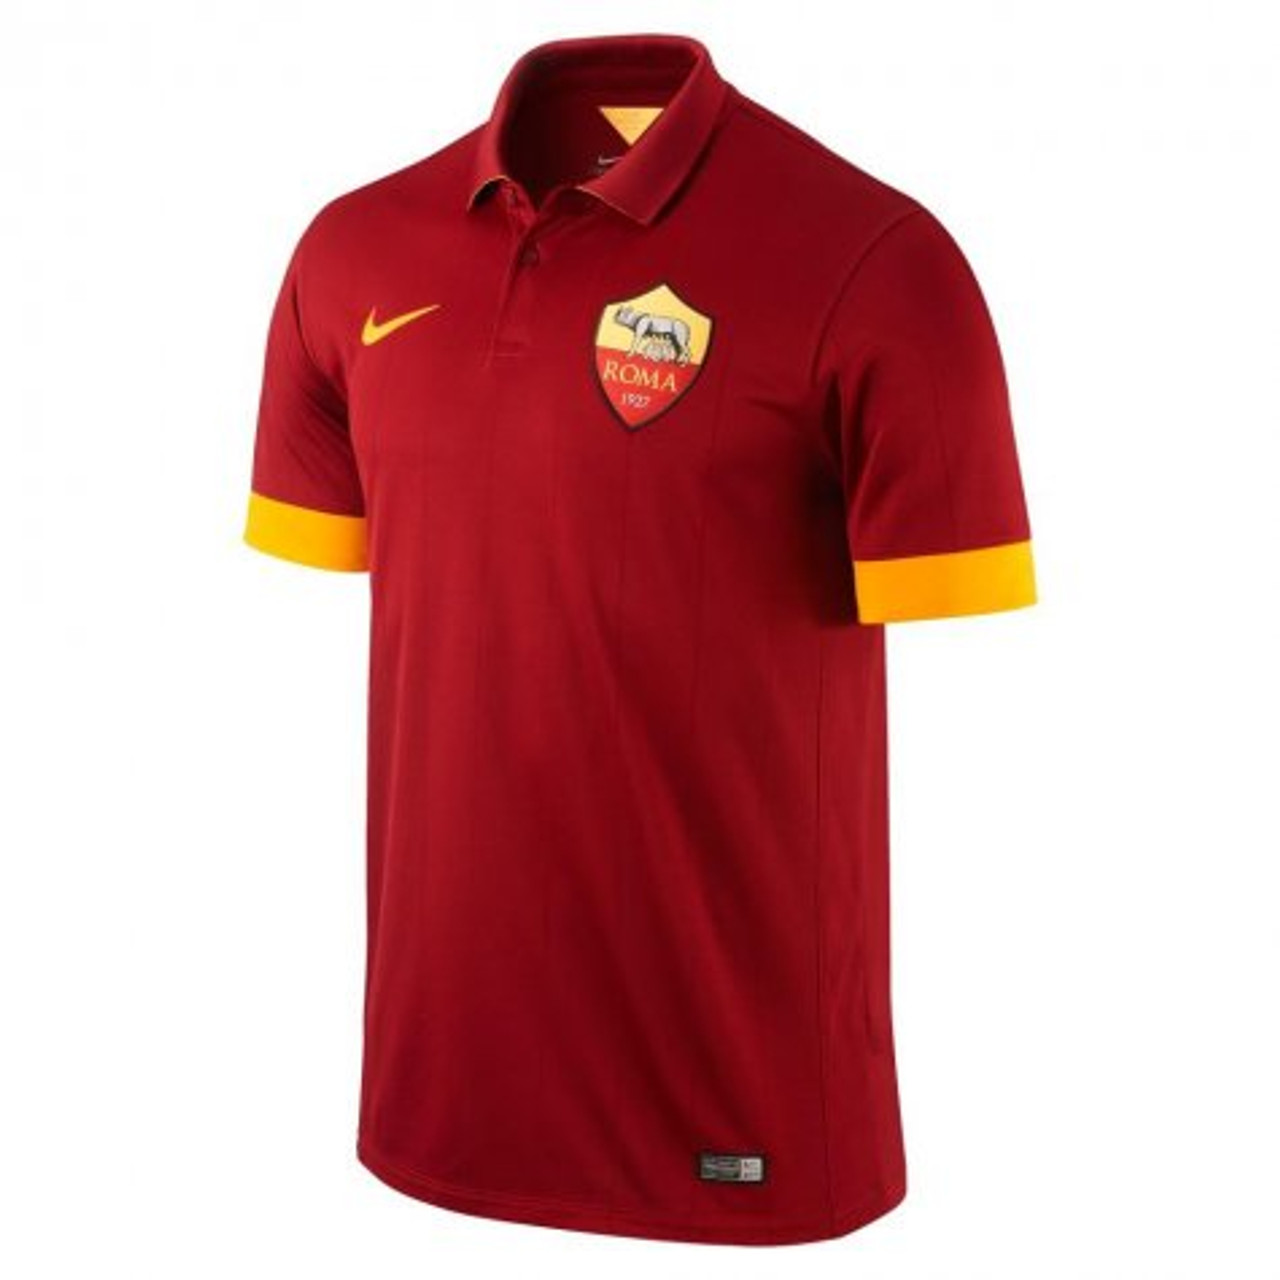 roma jersey 2015